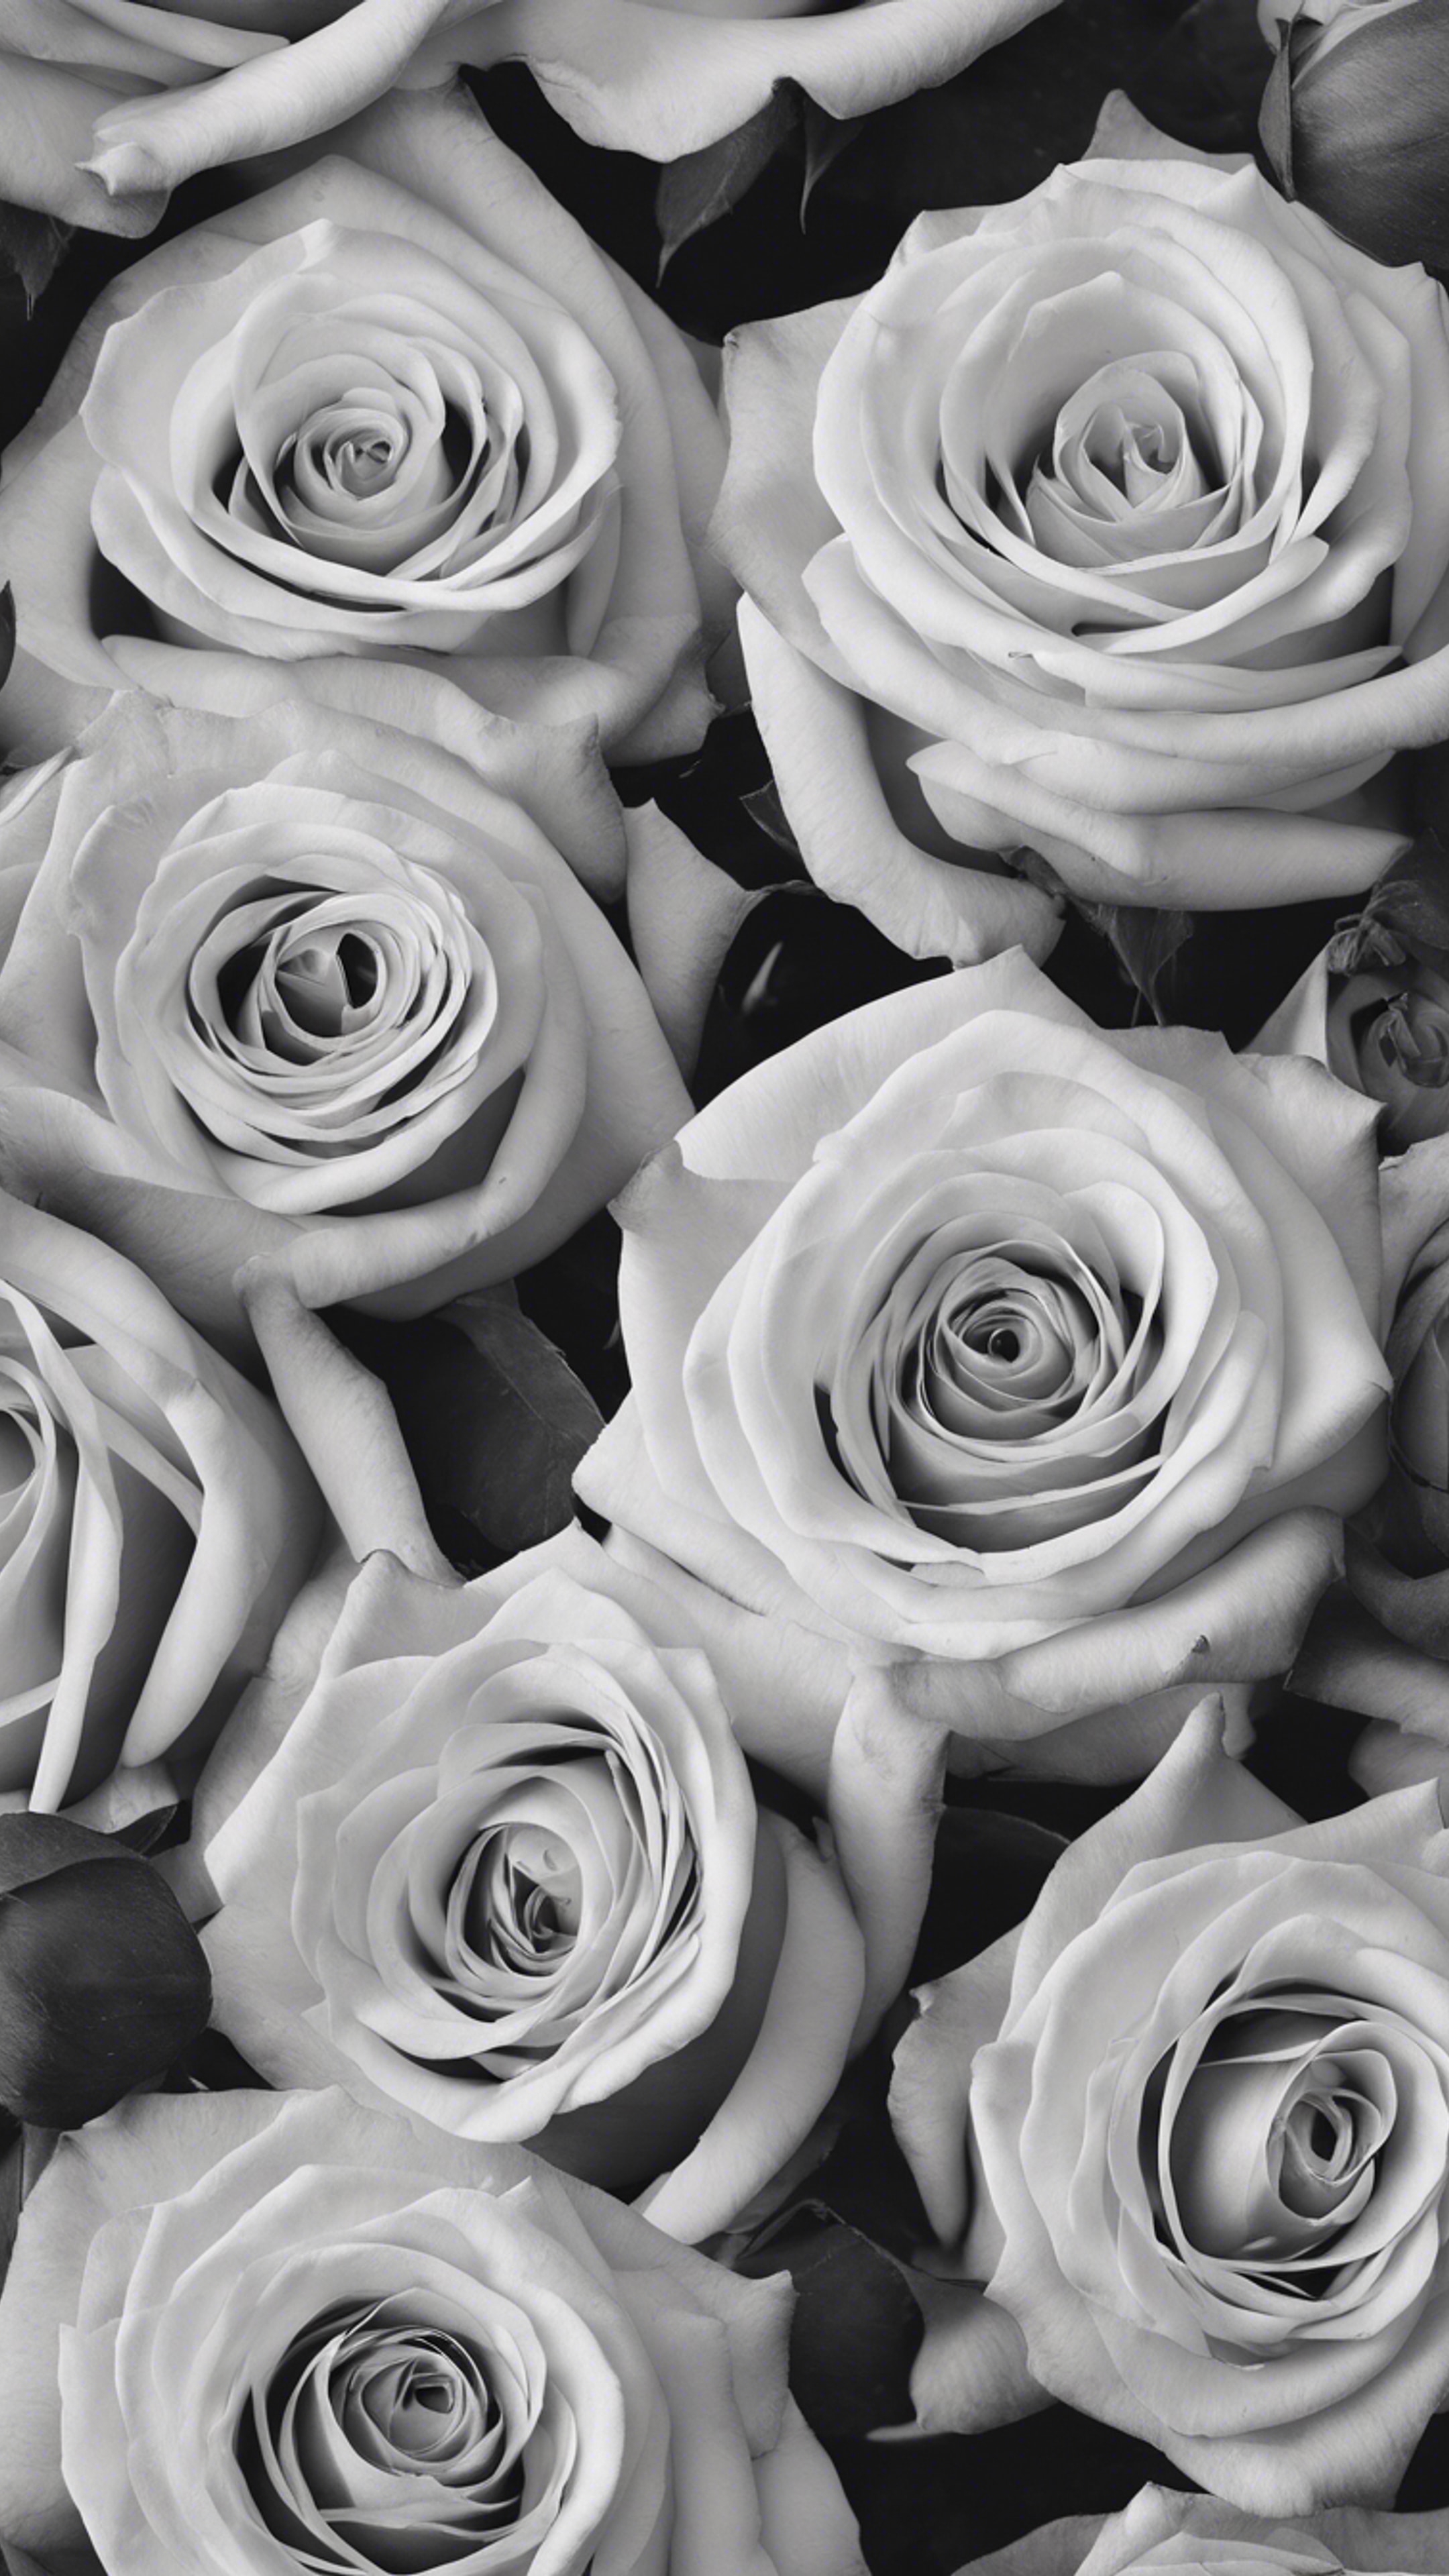 Monochromatic roses ornately arranged in a seamless pattern. Tapeta[c90b416599ba4a59a2c6]